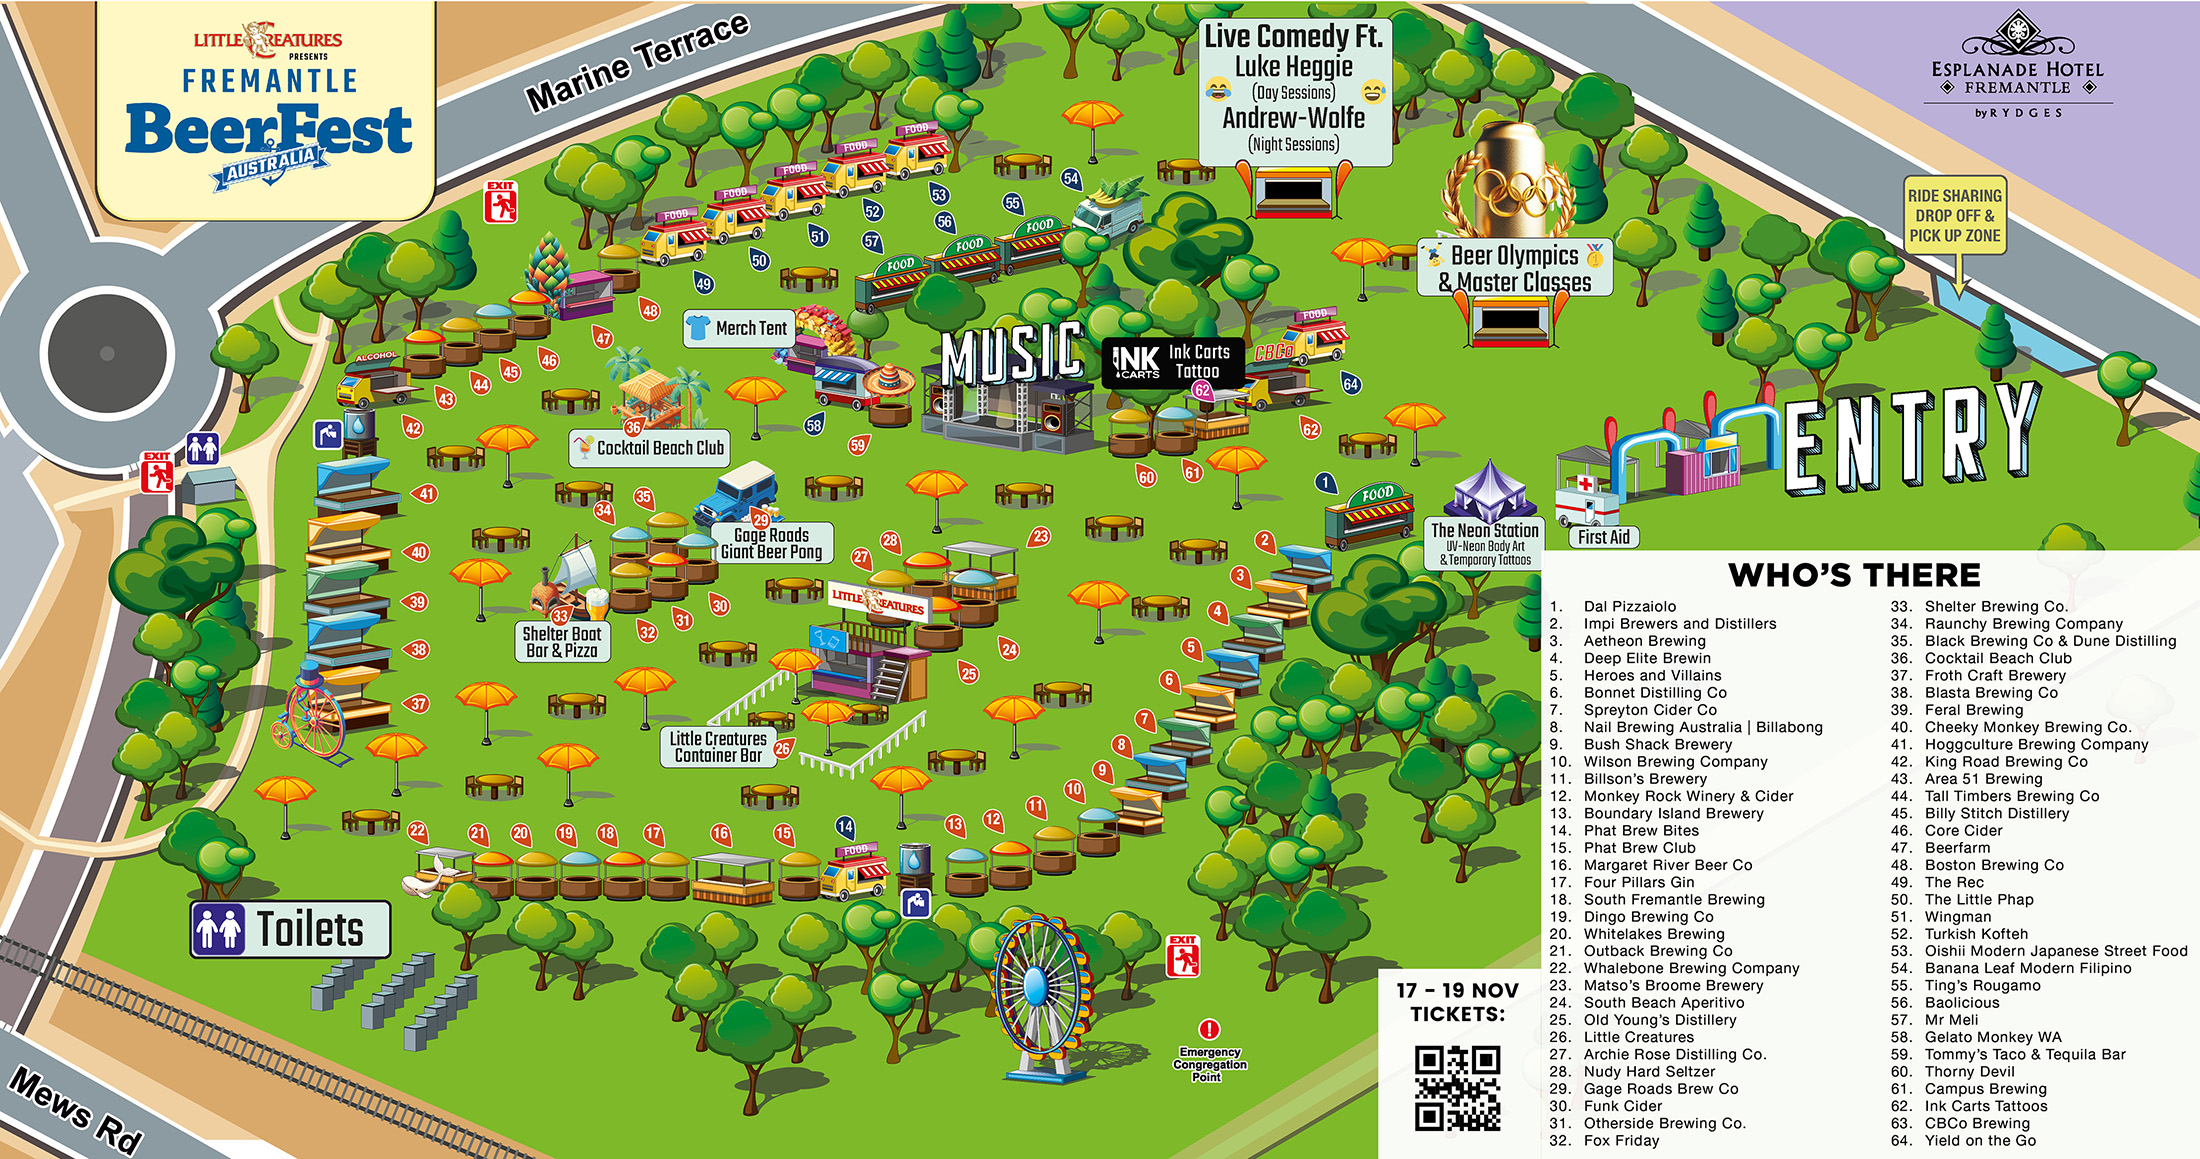 The festival map for Fremantle BeerFest 2023